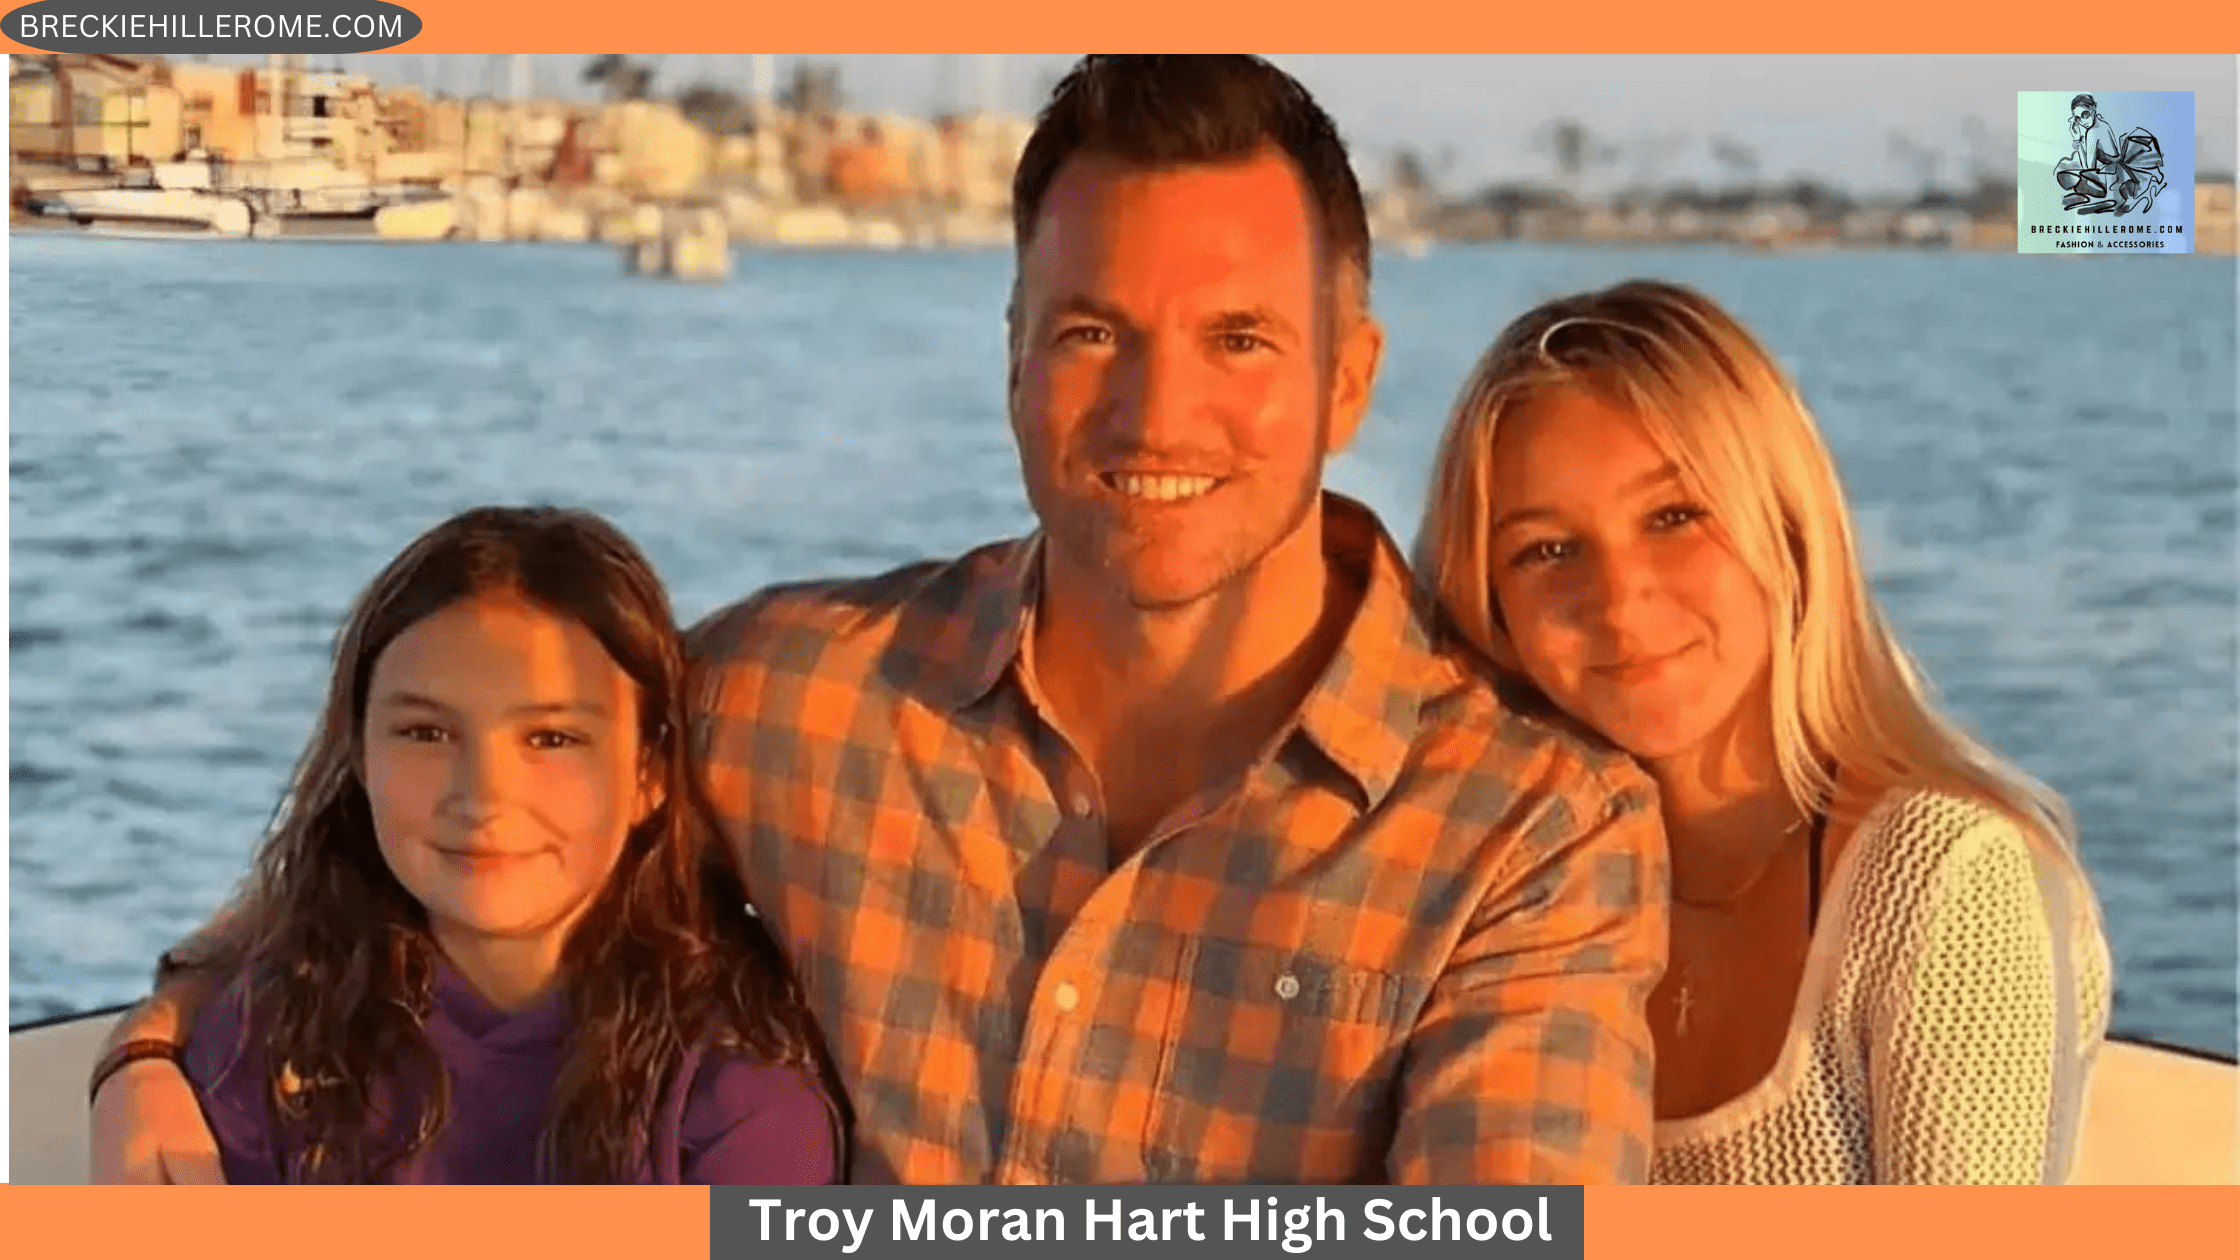 Troy Moran Hart High School - Breckiehillerome